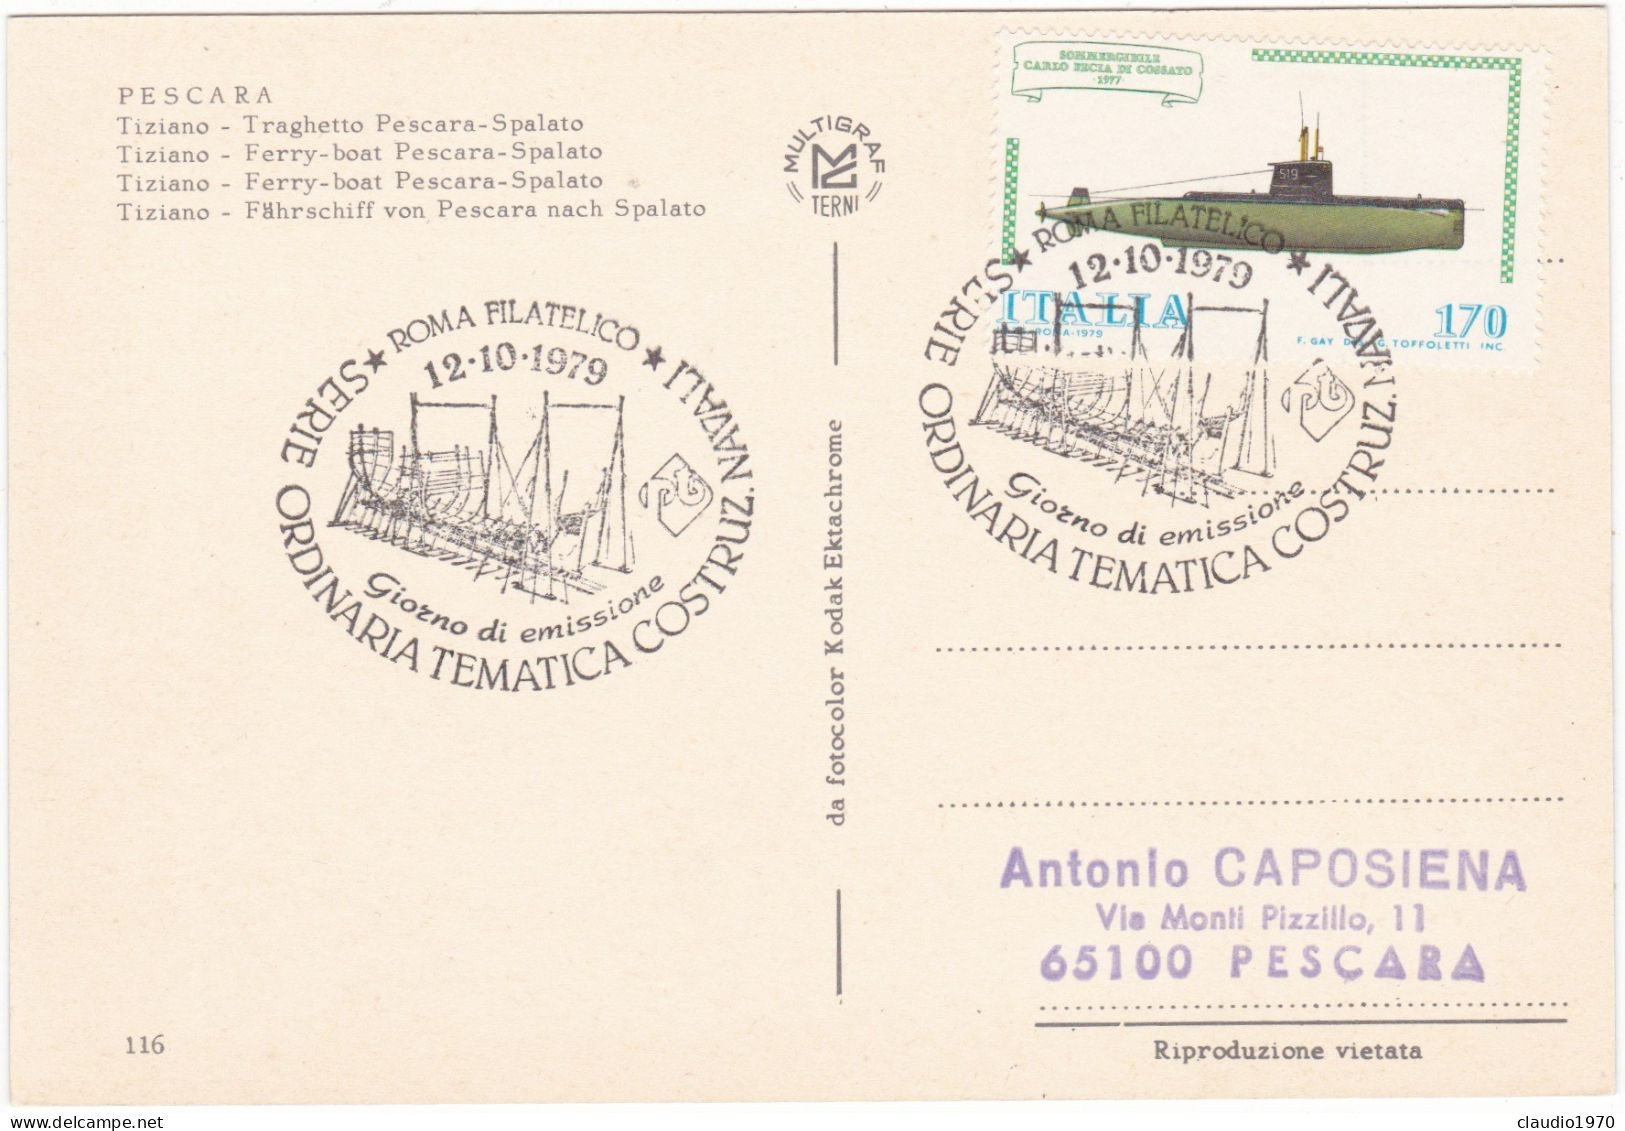 PESCARA - CARTOLINA - TIZIANO - TRGHETTO PESCARA - SPALATO - ANNULLO DI ROMA -1979 - Pescara